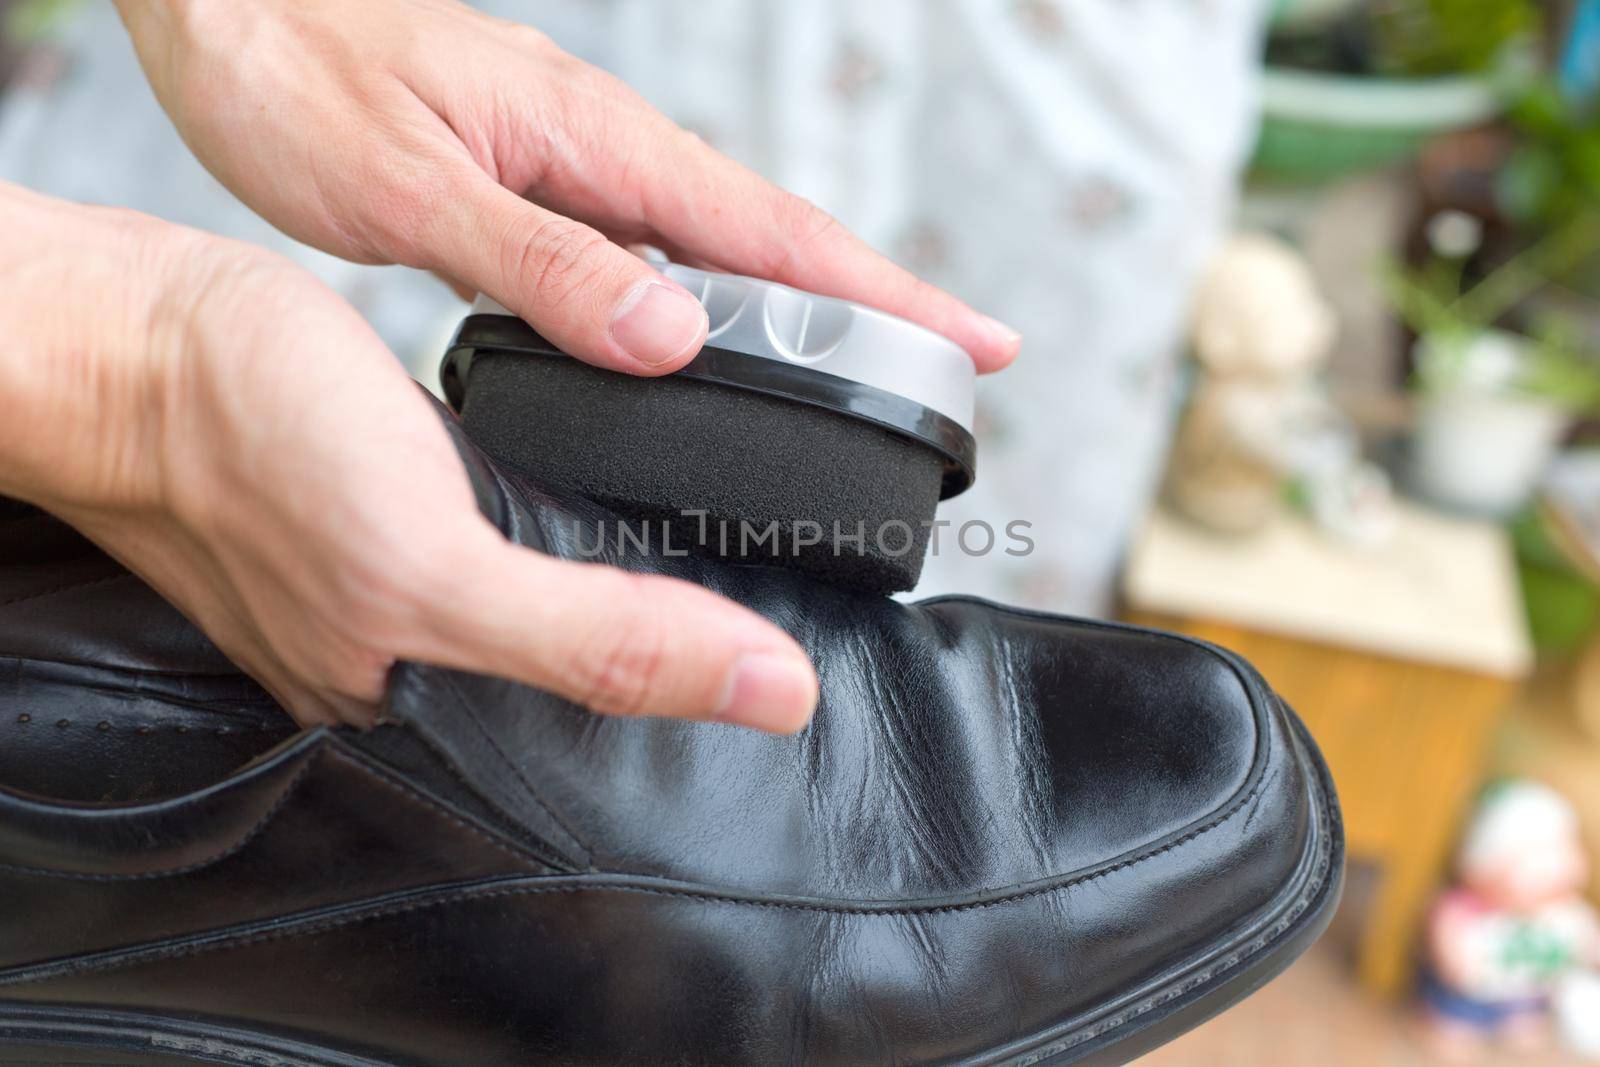 Hands polish leather black shoes. by jayzynism